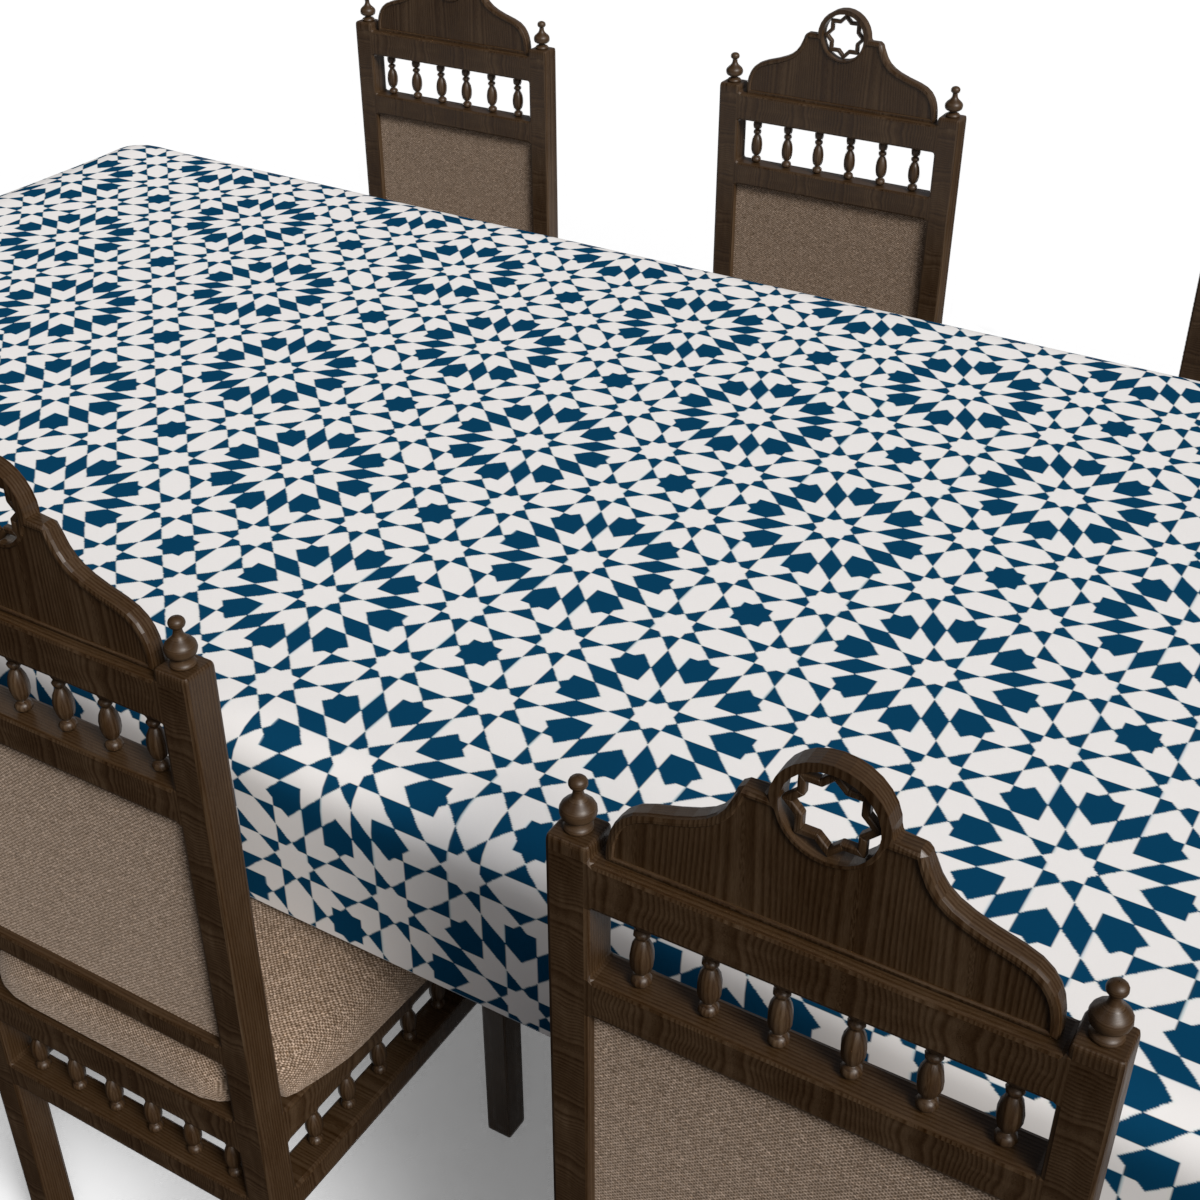 Topaz Tablecloth